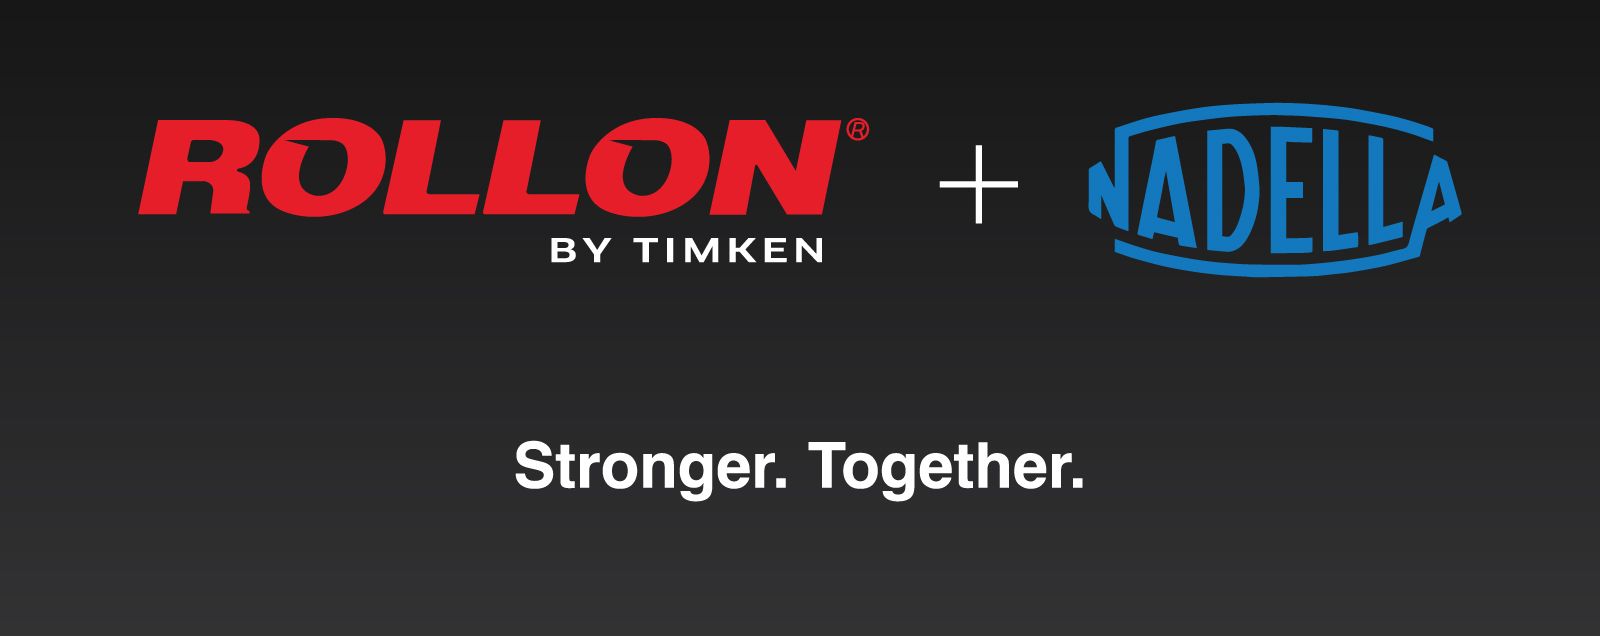 Rollon + Nadella: Stronger. Together.